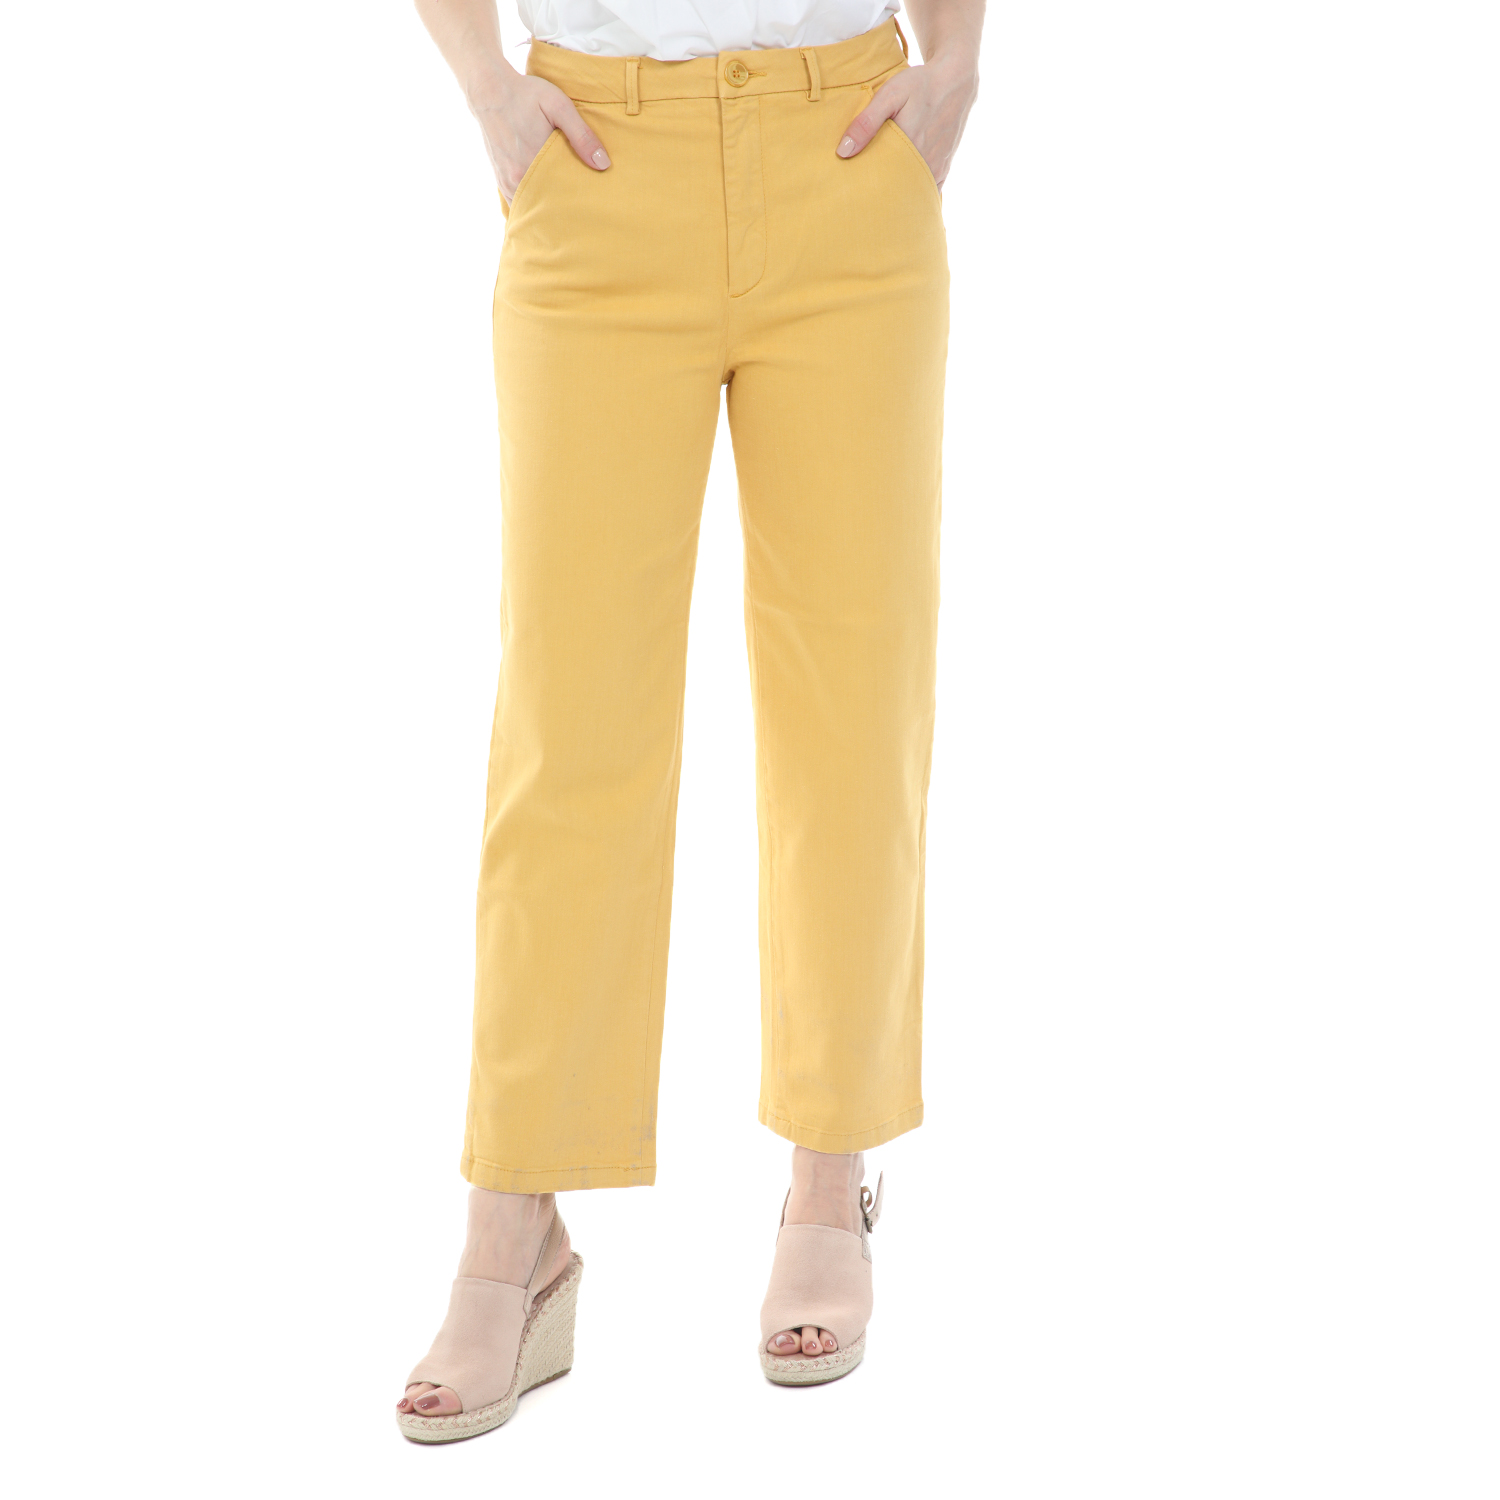 REIKO Γυναικείο παντελόνι cropped REIKO SANDY HIGH κίτρινο